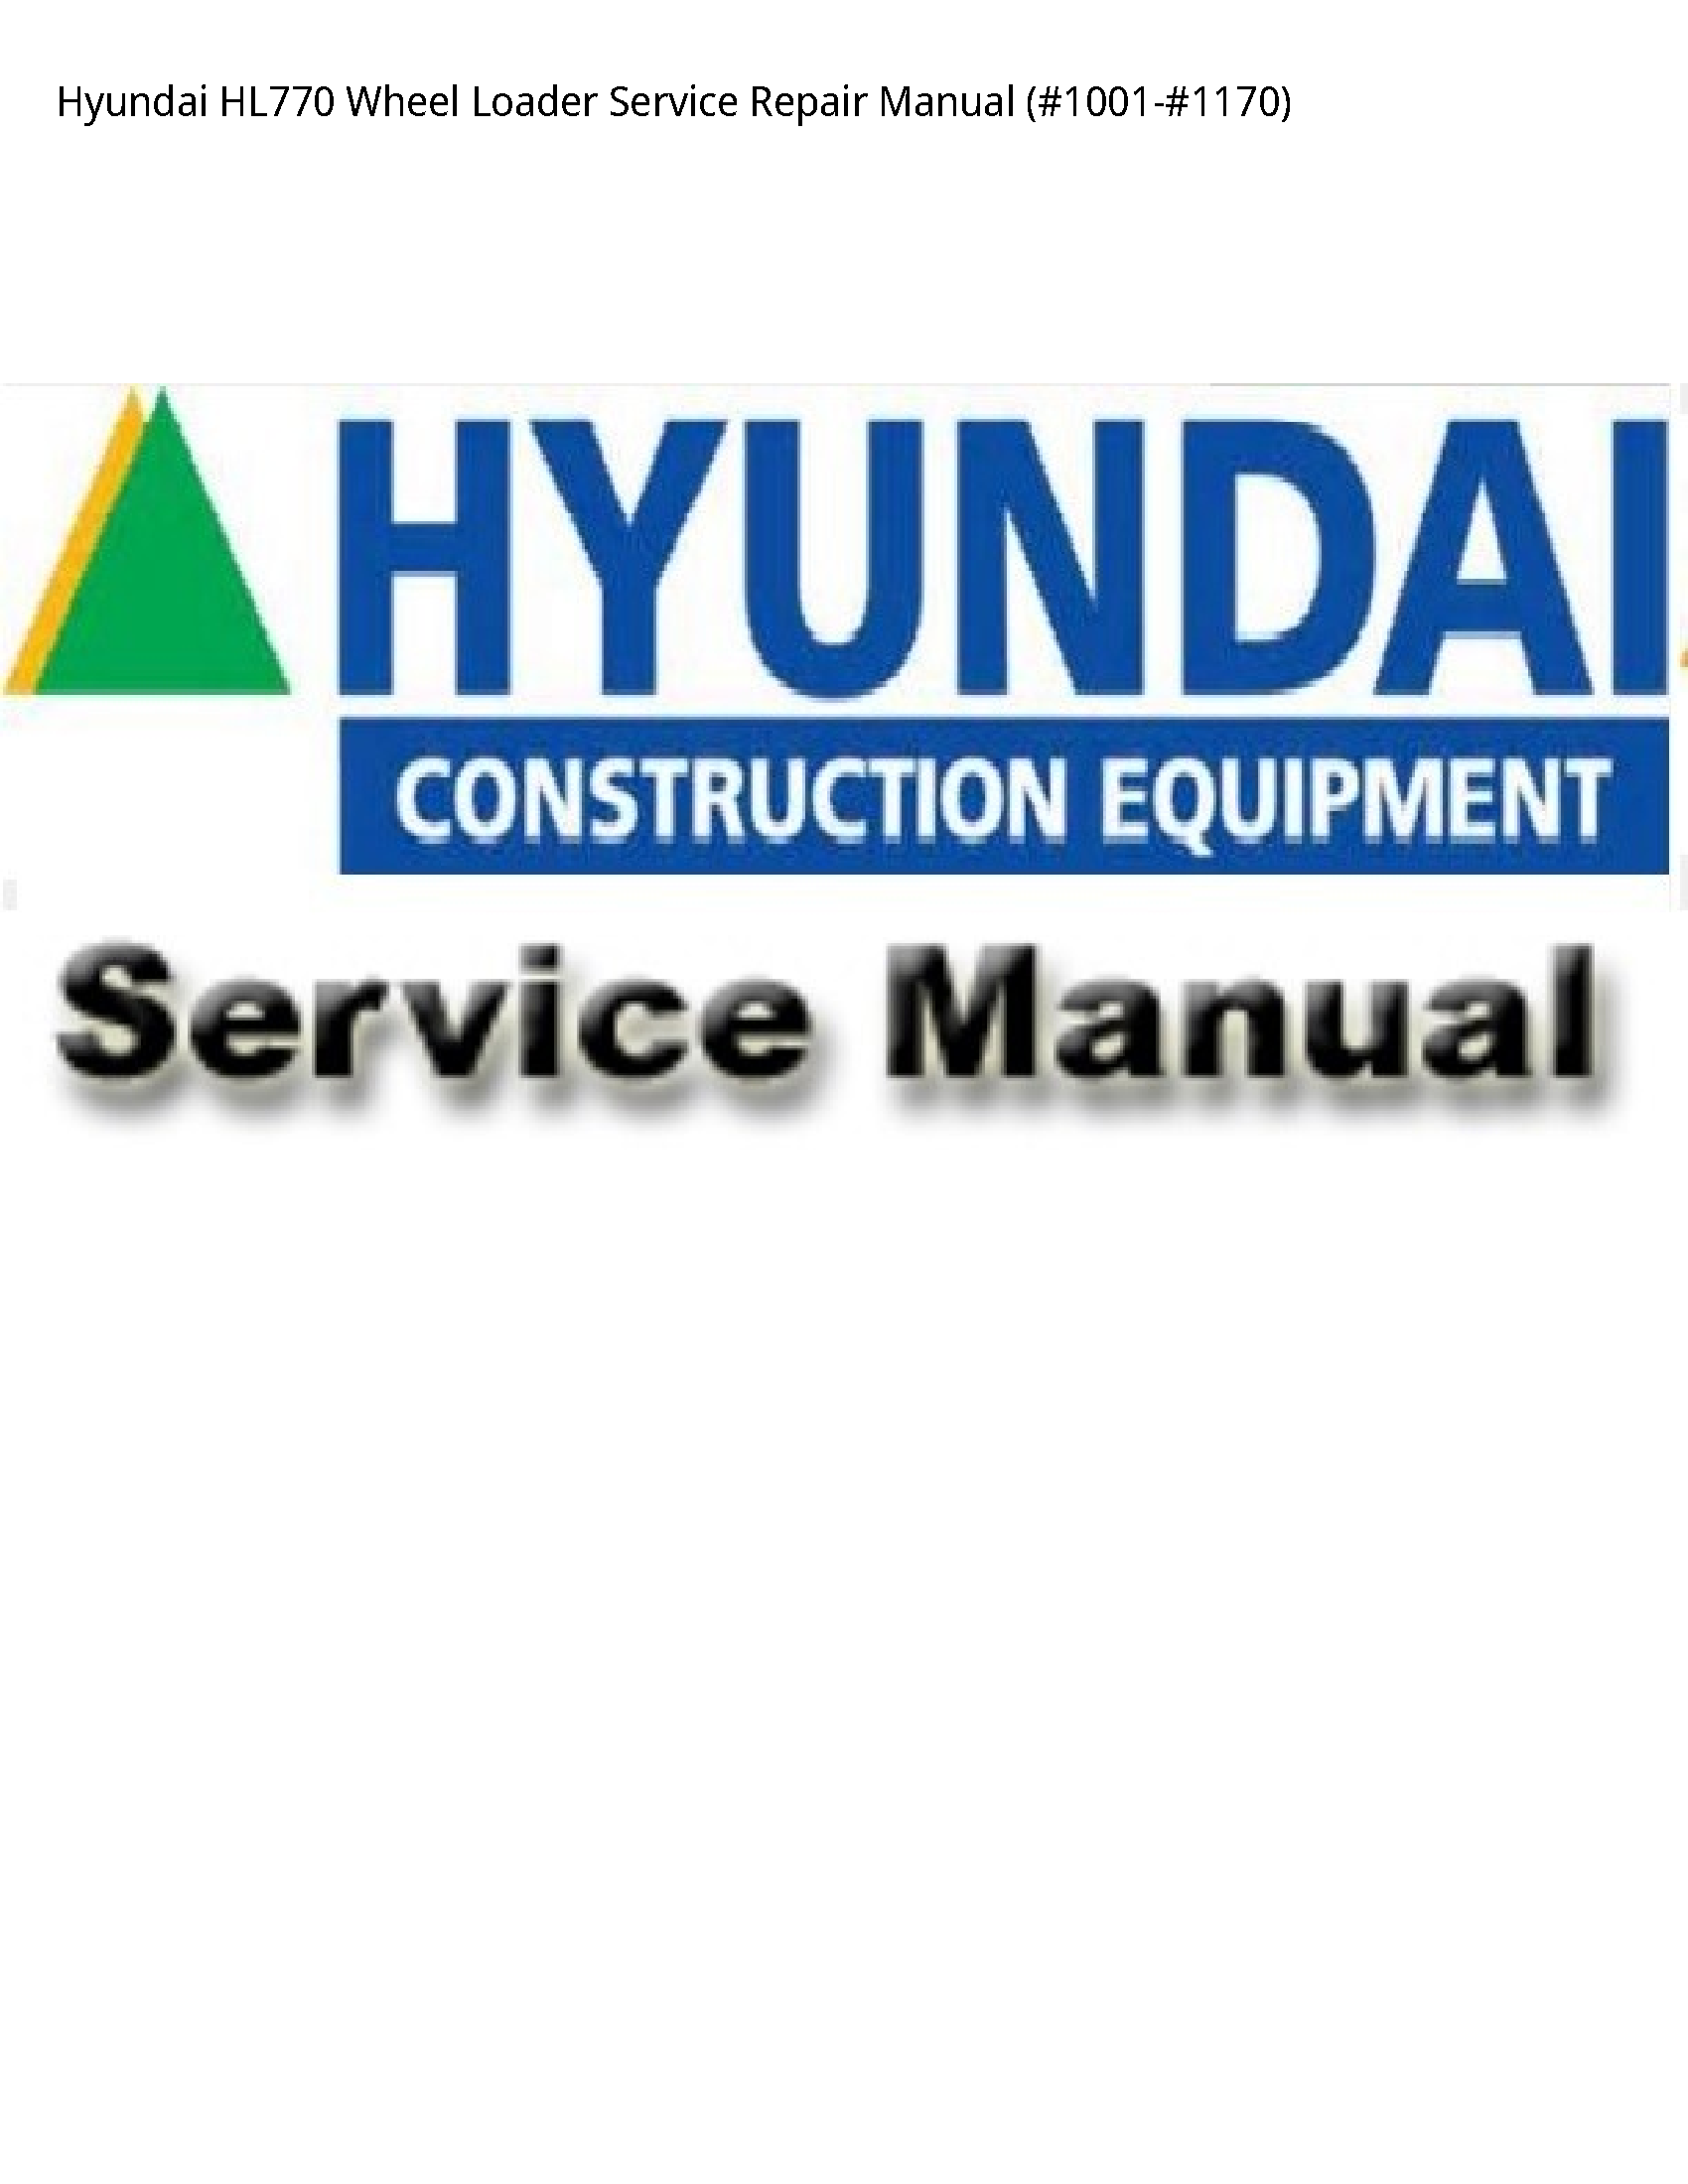 Hyundai HL770 Wheel Loader manual